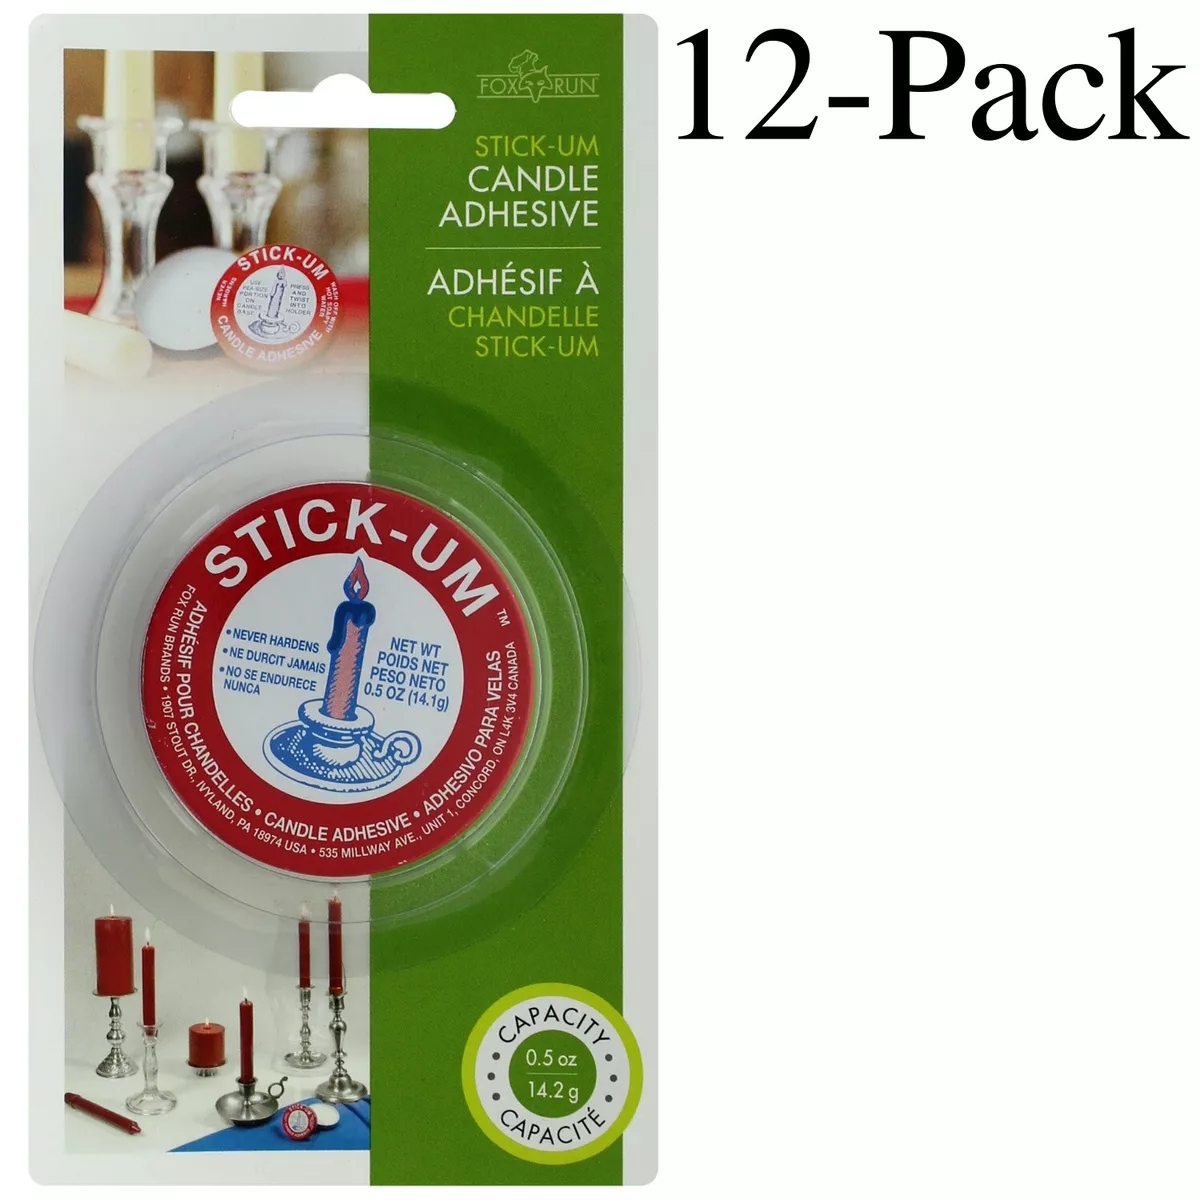 Fox Run Stick-Um Candle Adhesive Net Weight 0.5 oz (12-Pack)